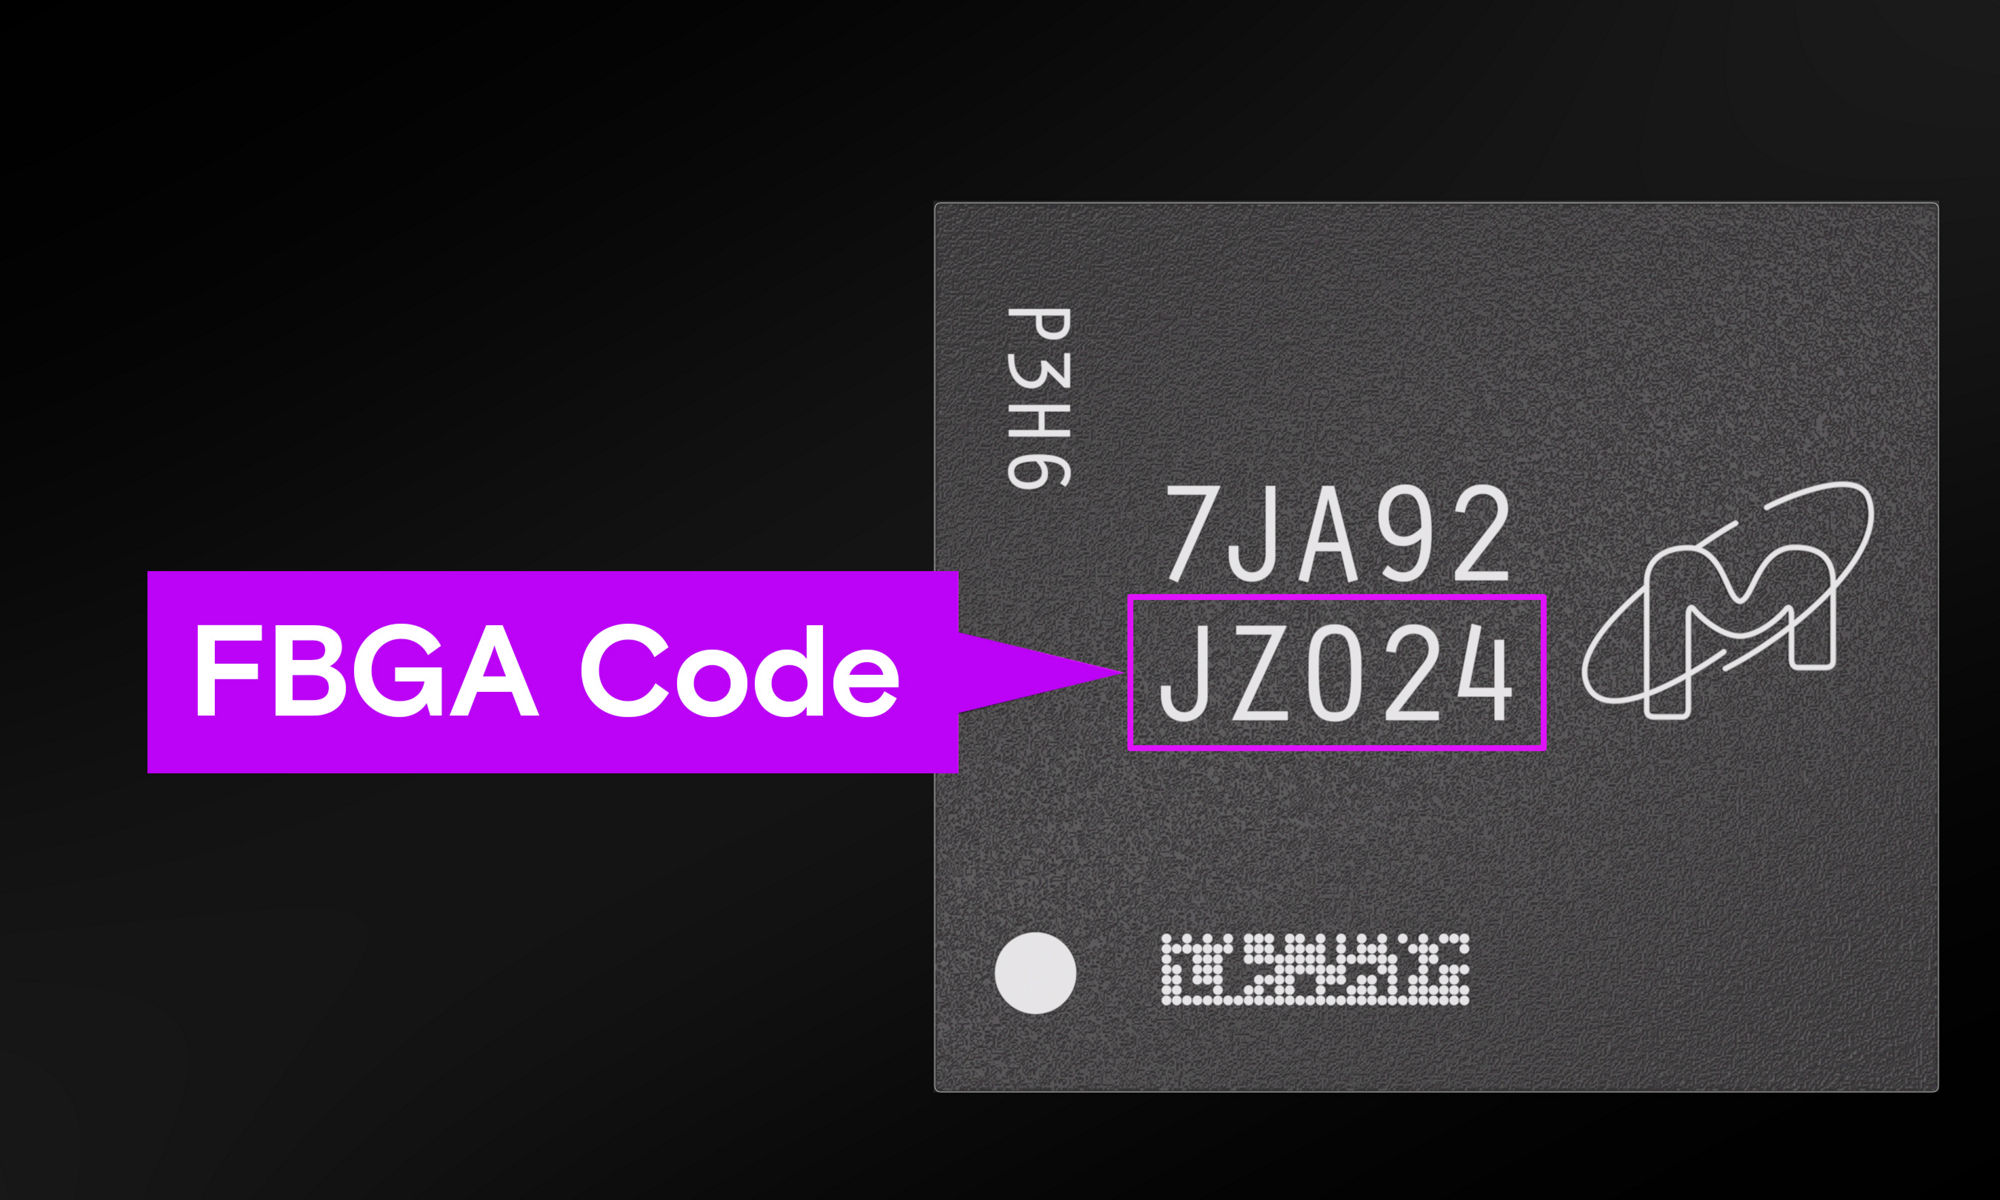 FBGA code highlighted on a Micron FBGA component